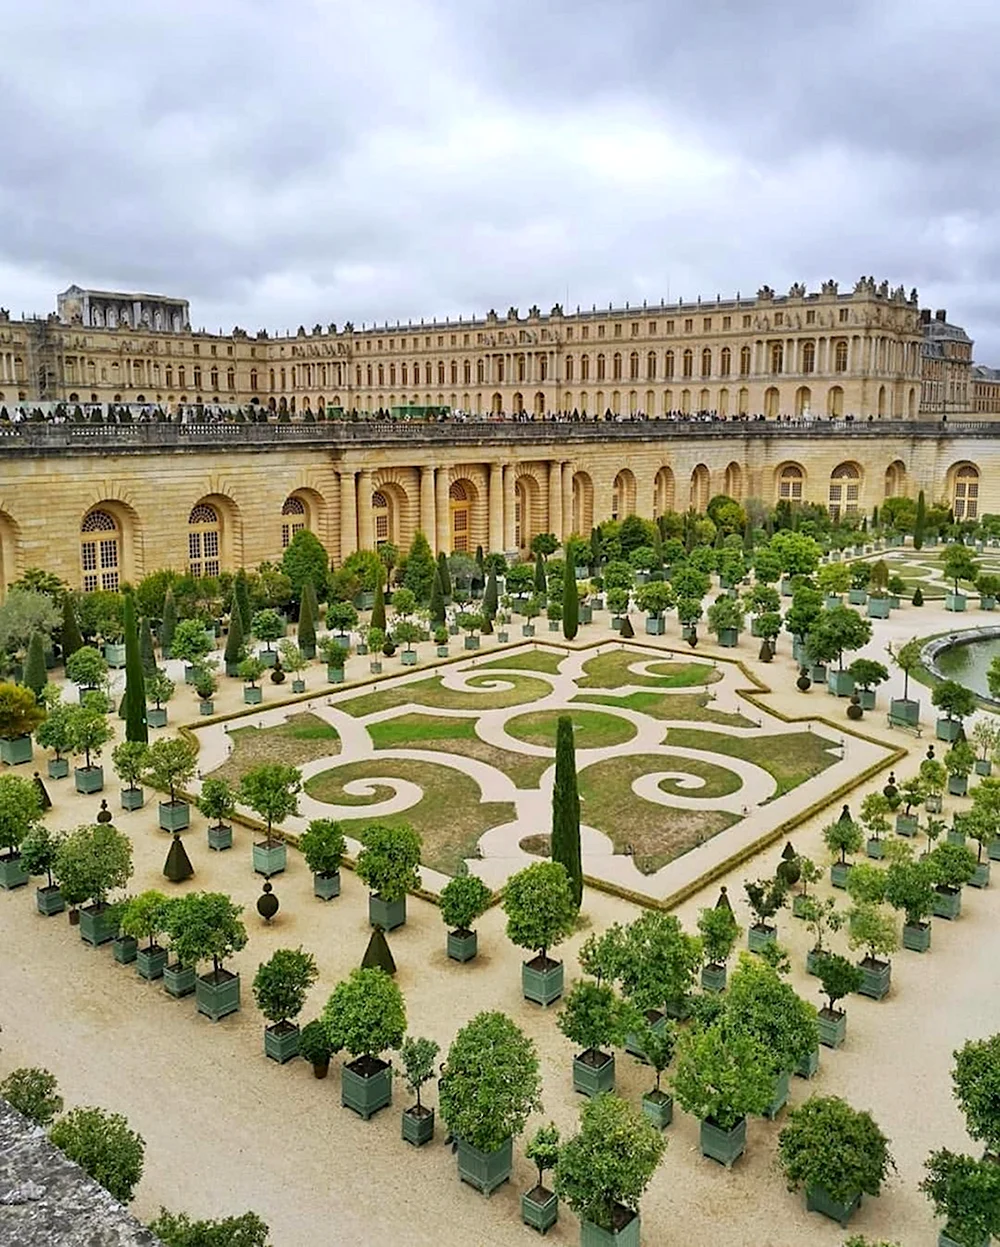 Версальский дворец. Версаль